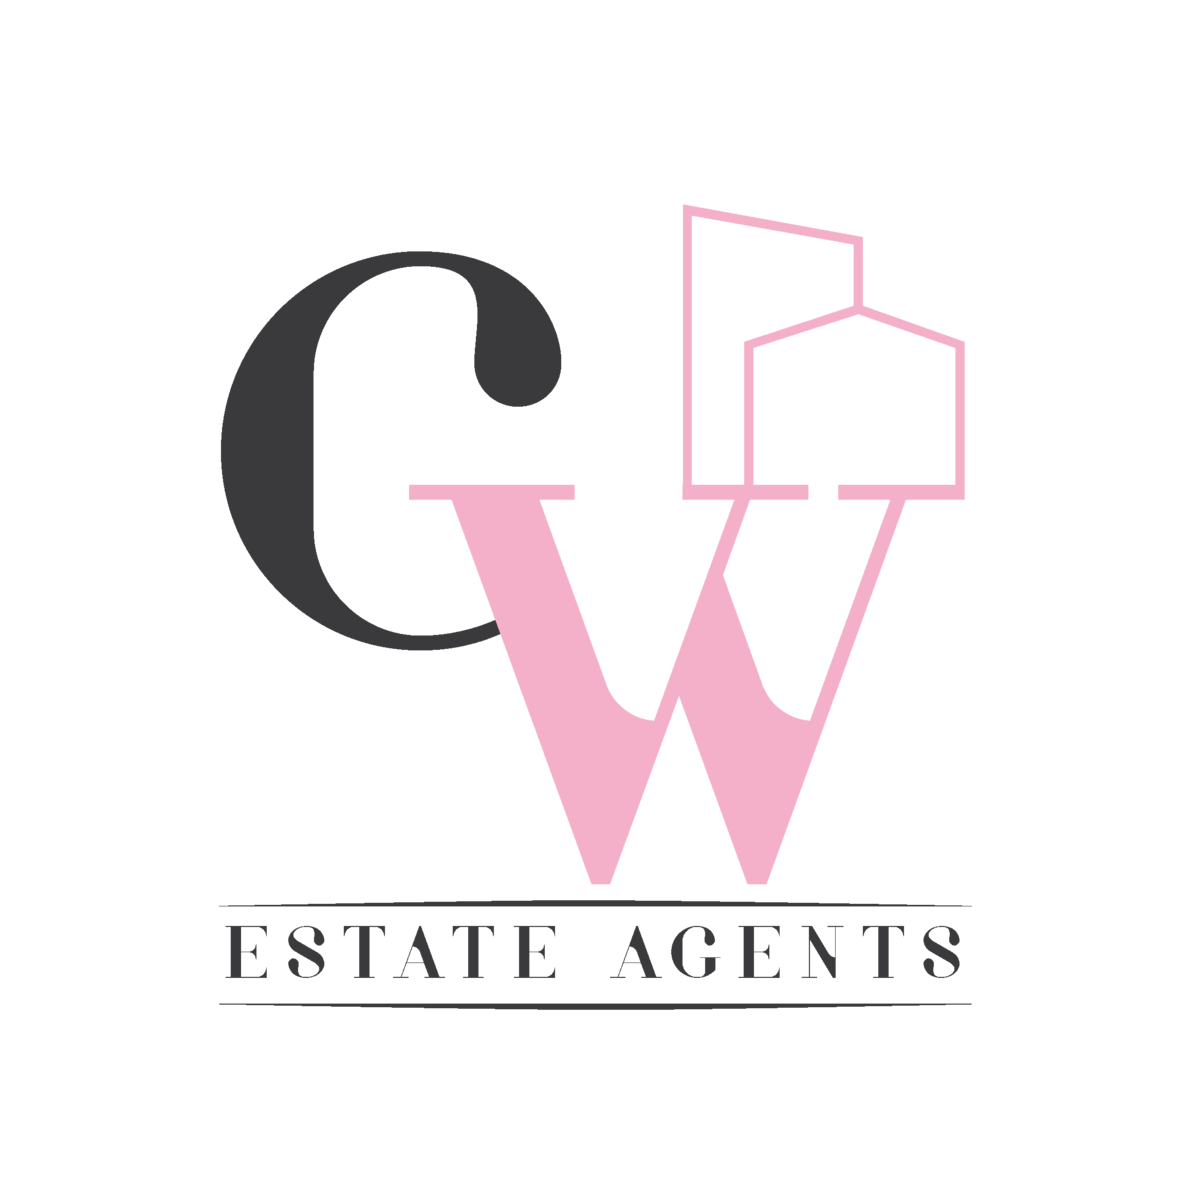 CW Estate Agents